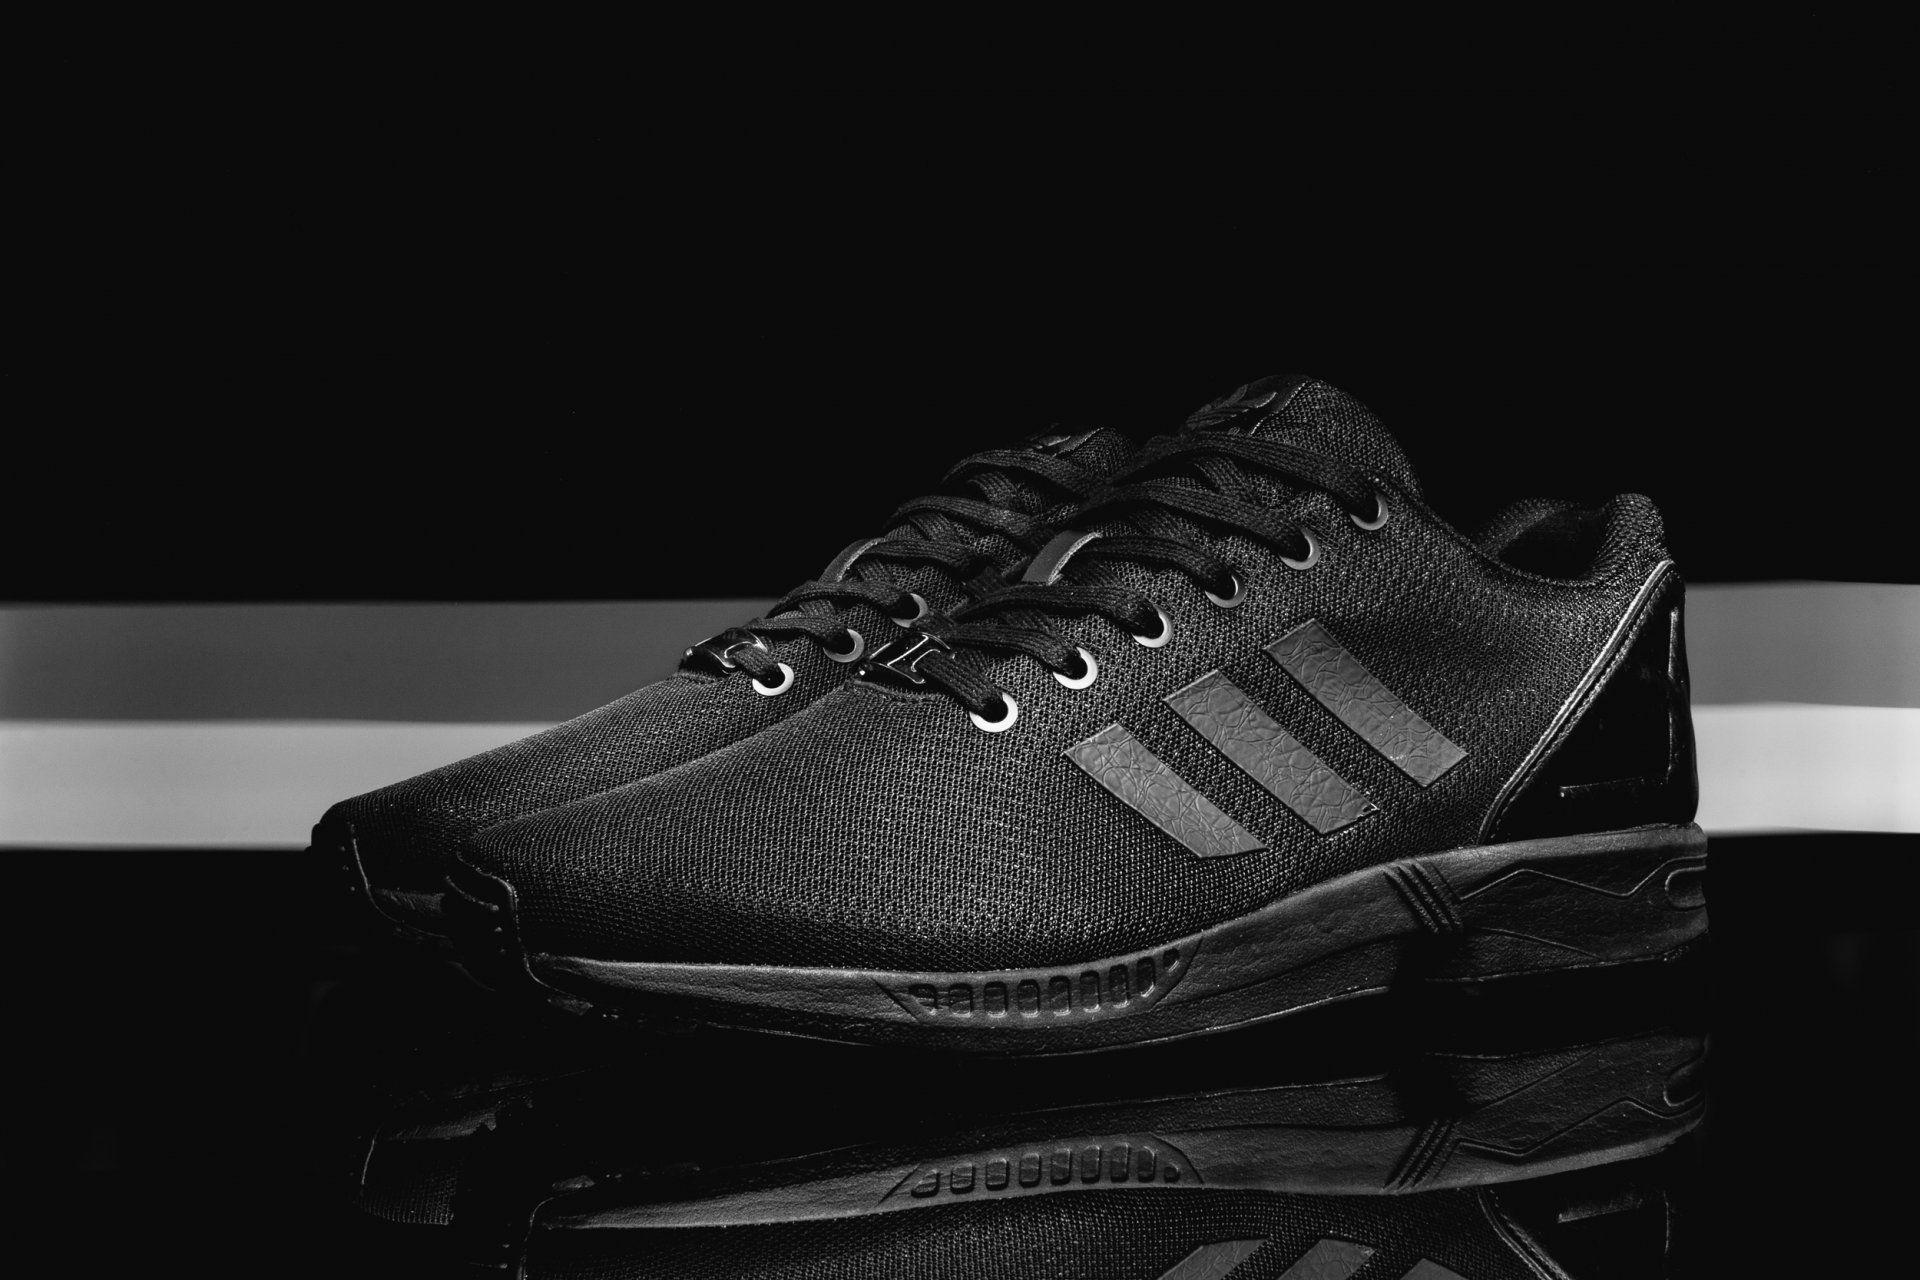 Full HD Of Adidas Zx Flux Blackout Shoes Wallpaper Pics Desktop